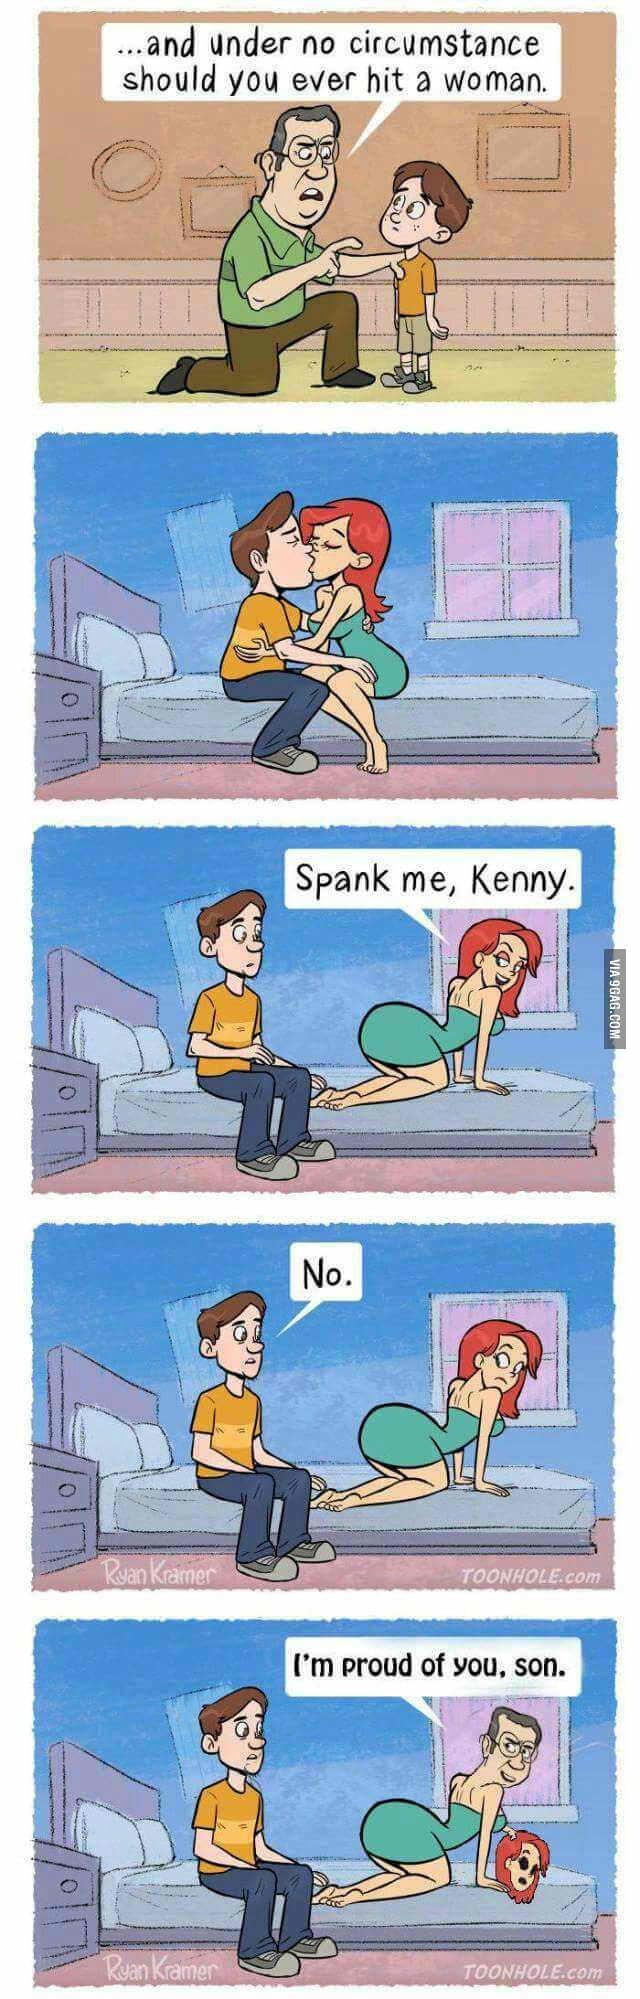 meme don t hit women comic - ... and under no circumstance should you ever hit a woman. Spank me, Kenny. Via 9GAG.Com No. Toonhole.com I'm proud of you, son. Kramer Toonhole.com